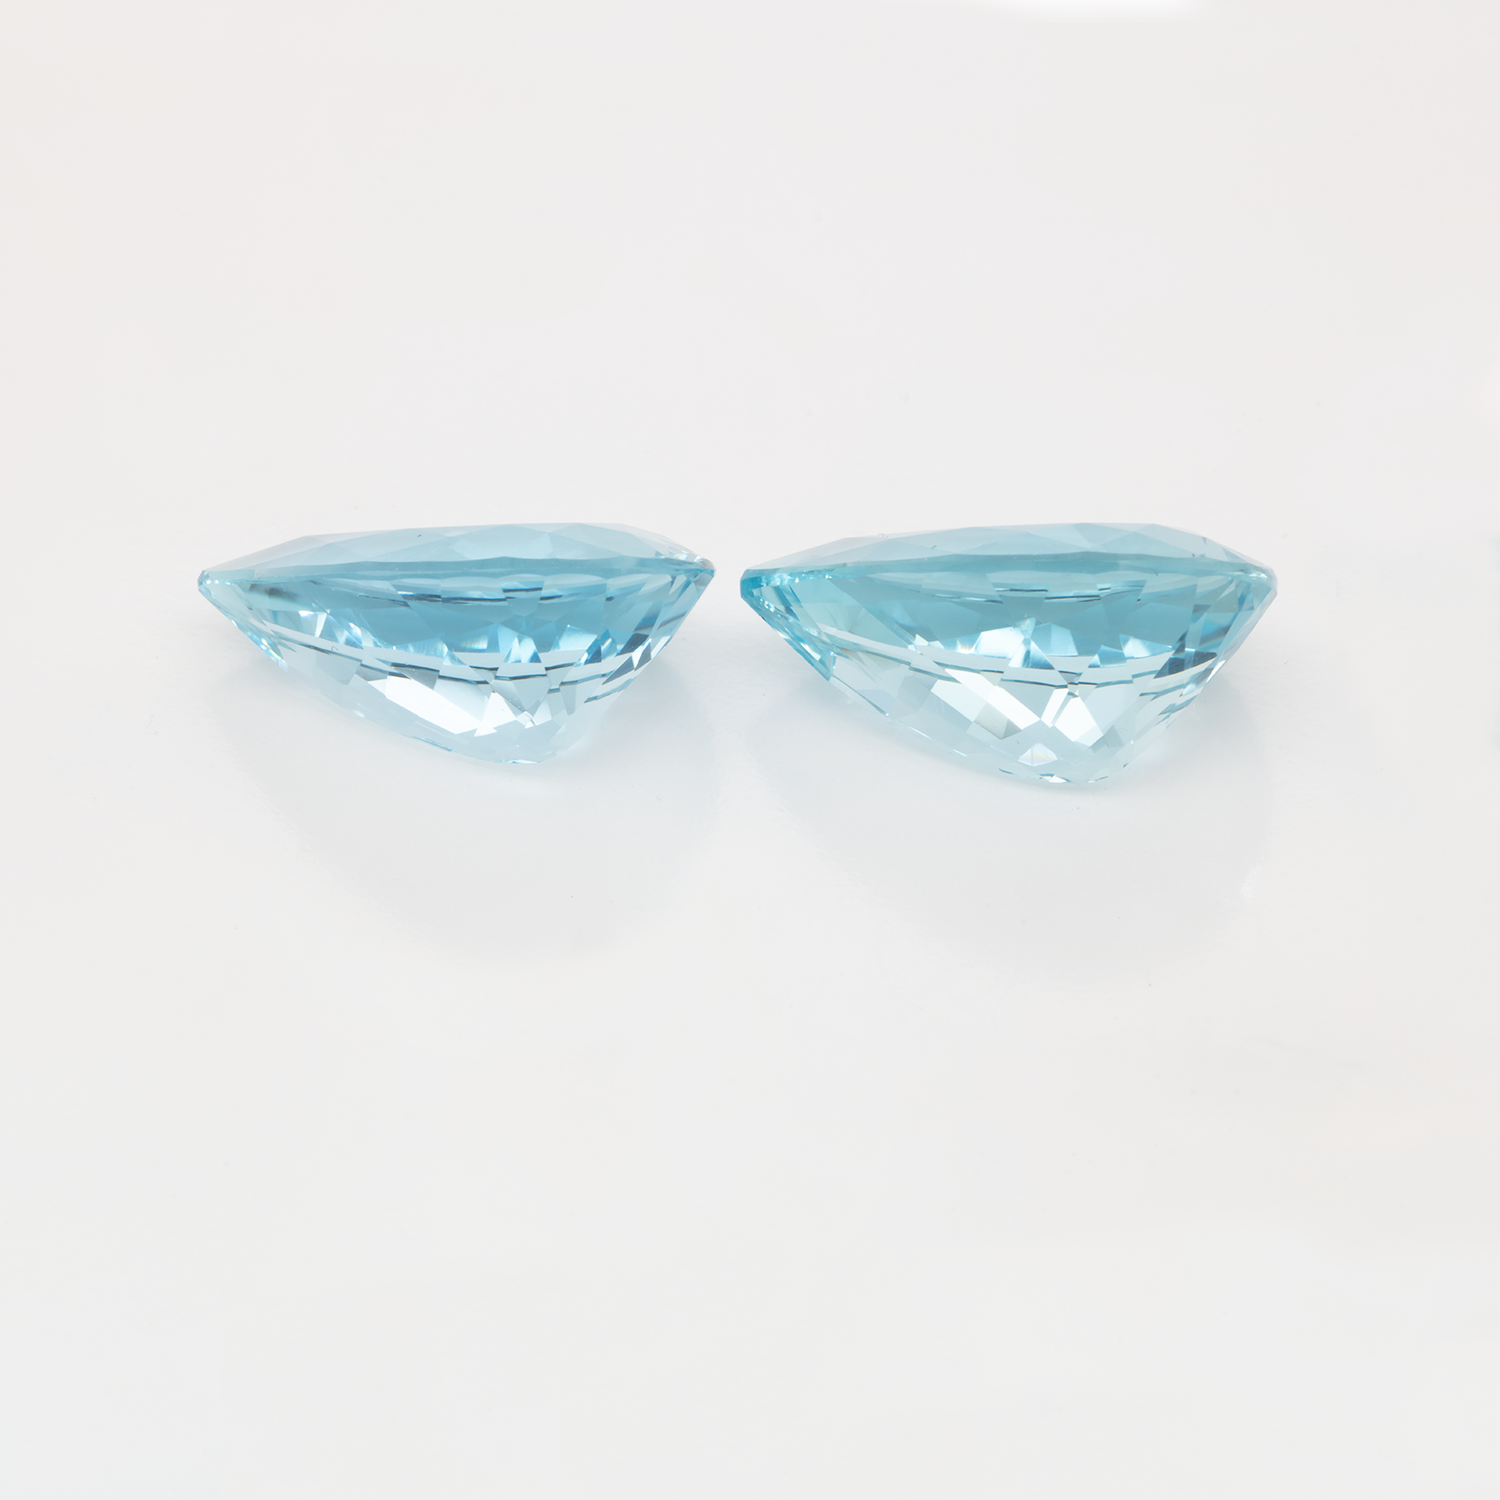 Aquamarine Pair - blue, pearshape, 16x11 mm, 11.69 cts, No. A99038